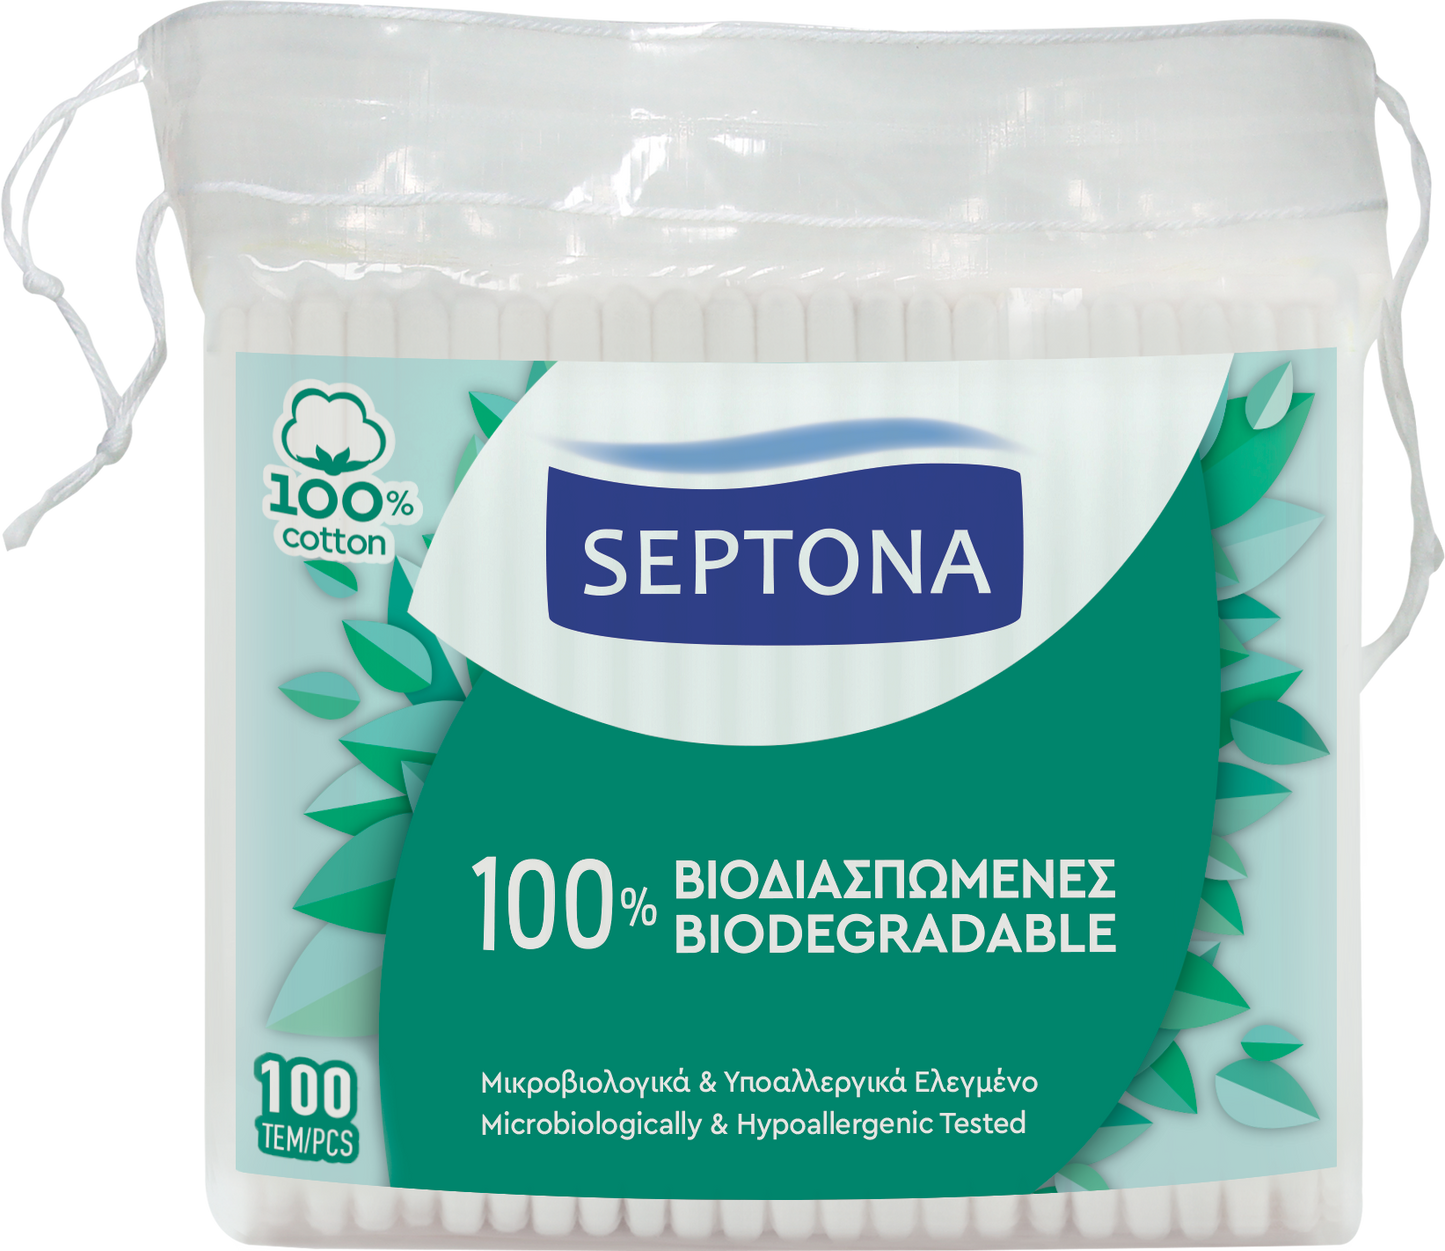 Septona cotton buds 100 PCS BIODEGRADABLE - Refill 100pcs - BambiniJO | Buy Online | Jordan